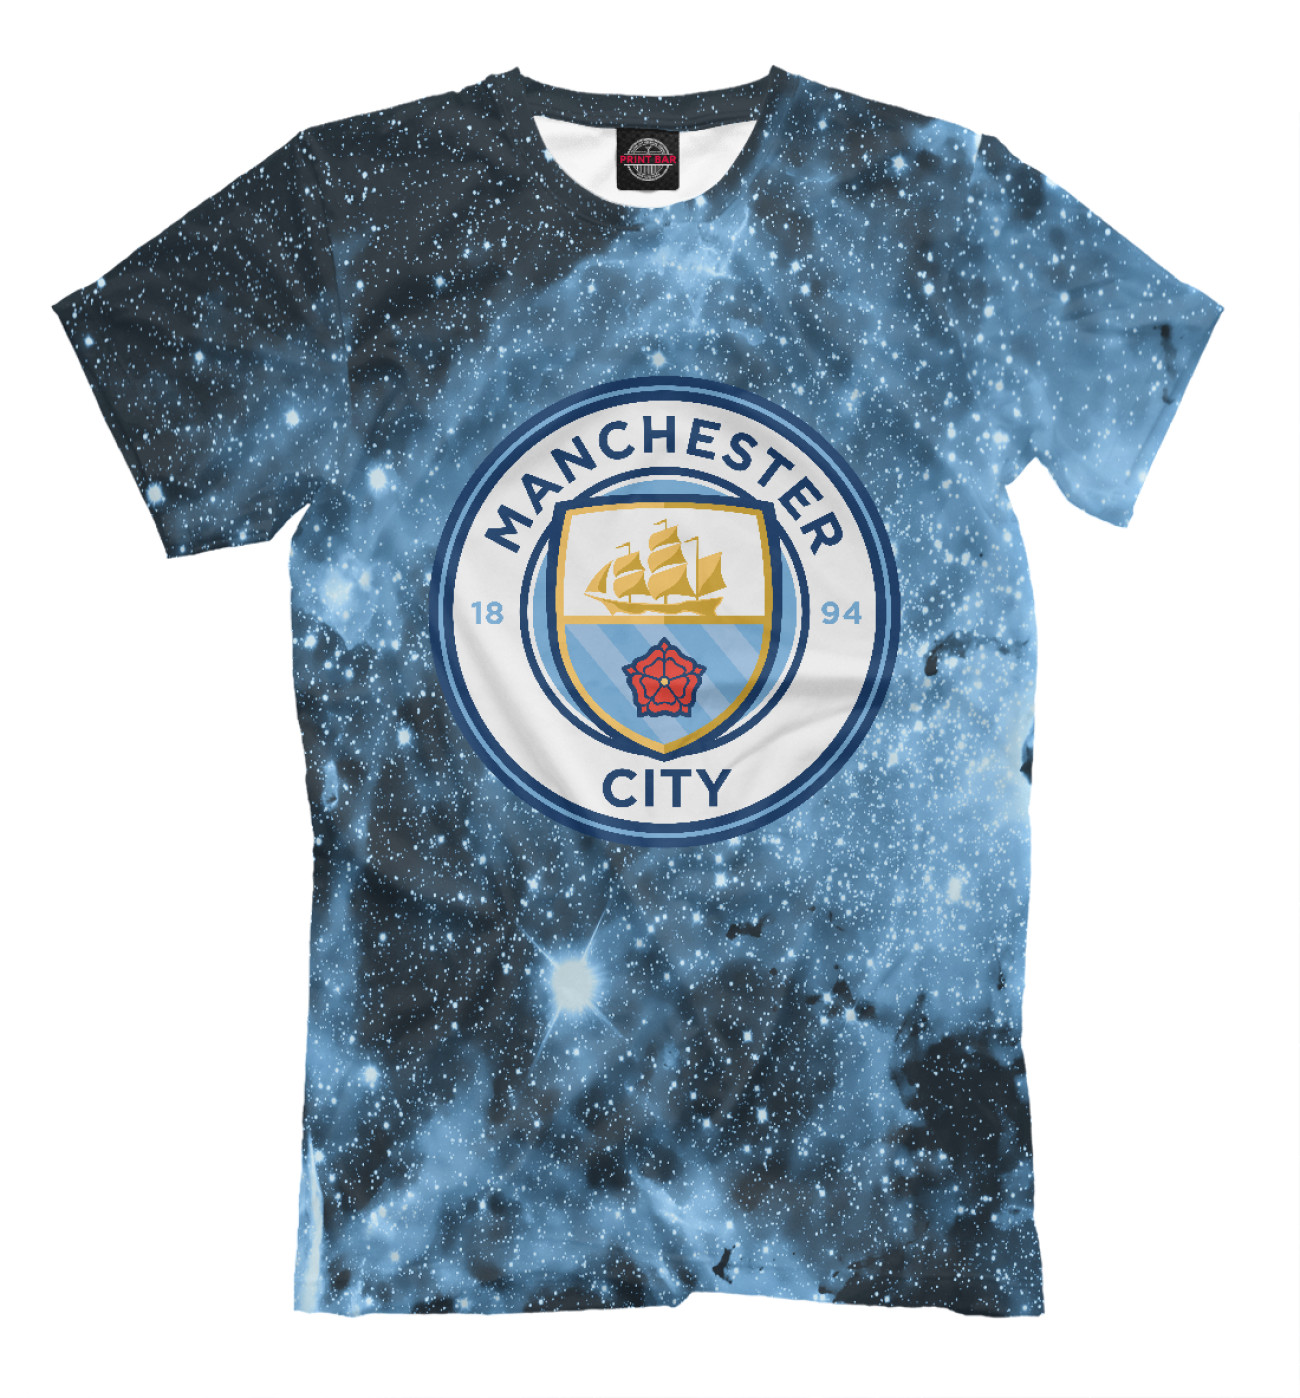 Мужская Футболка Manchester City Cosmos, артикул: MNC-101278-fut-2